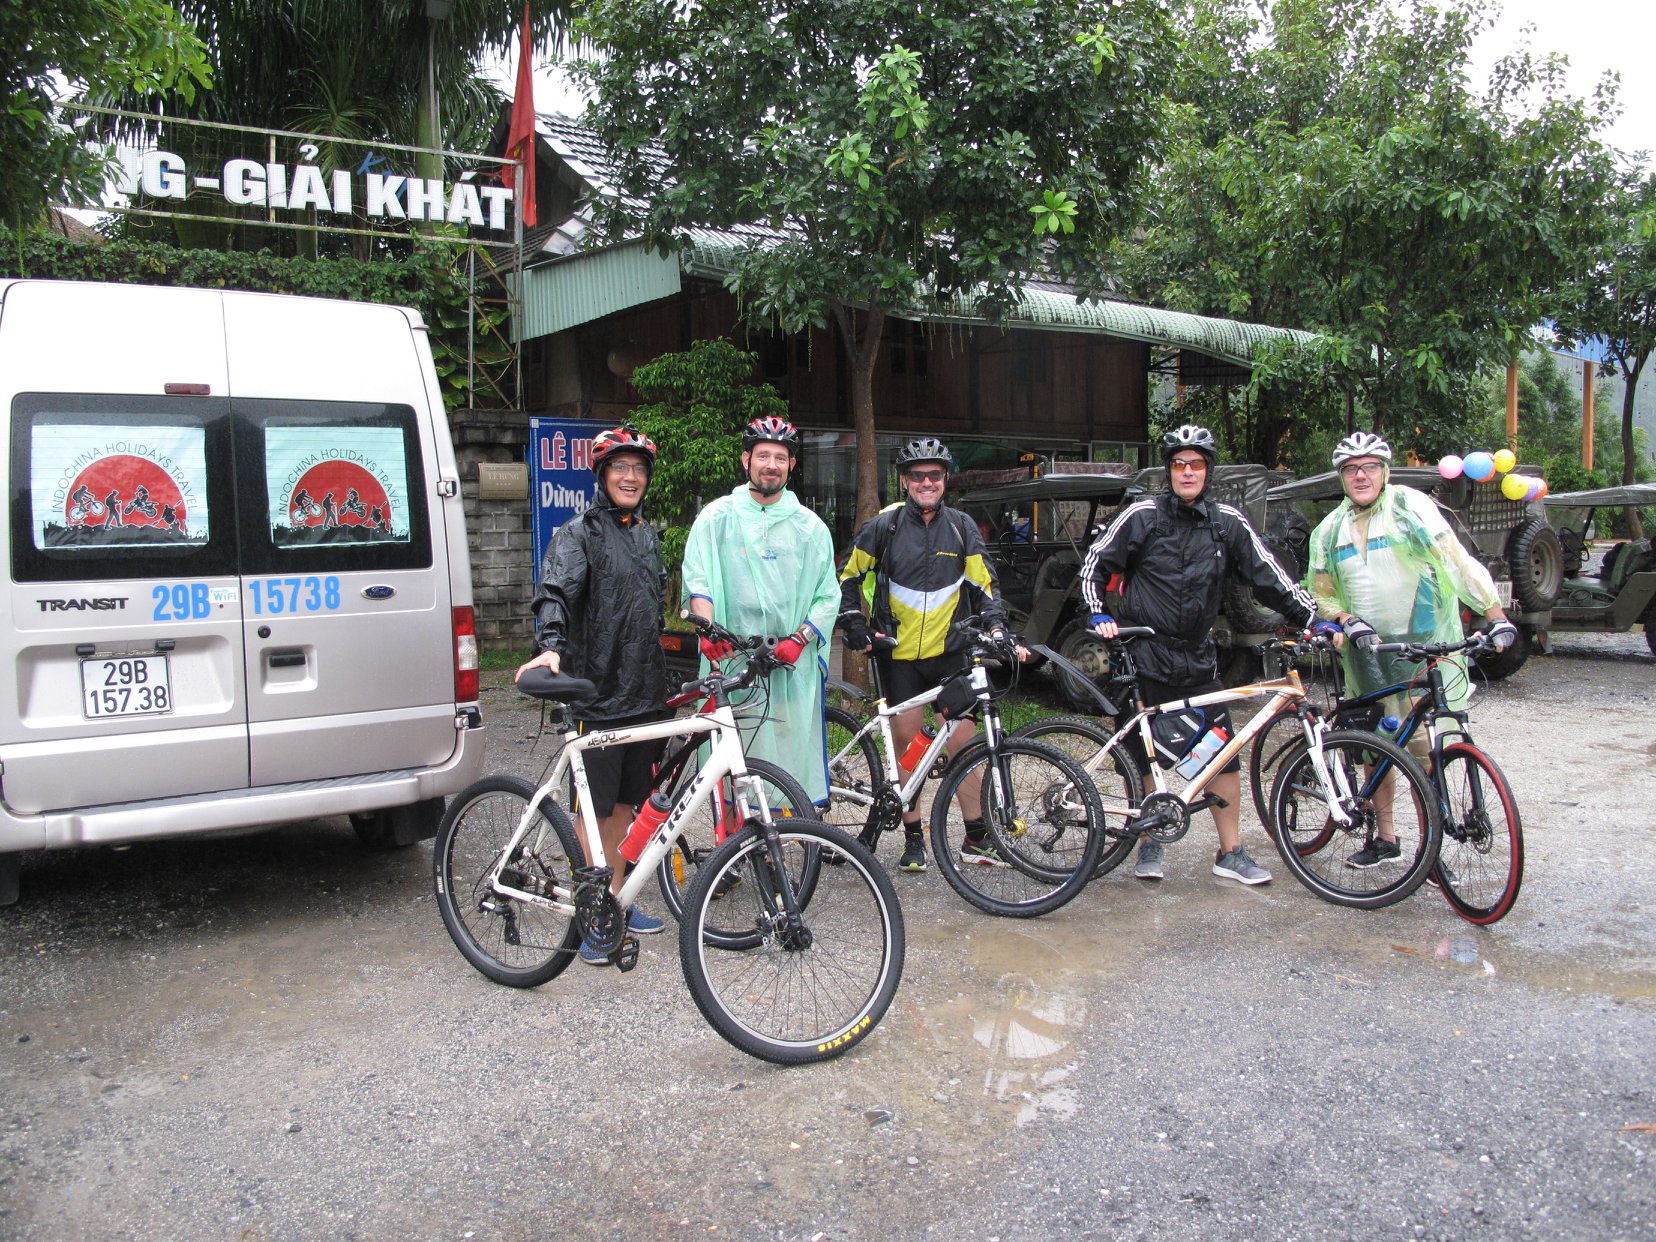 Laos Adventure Biking Tours – 13 days 2